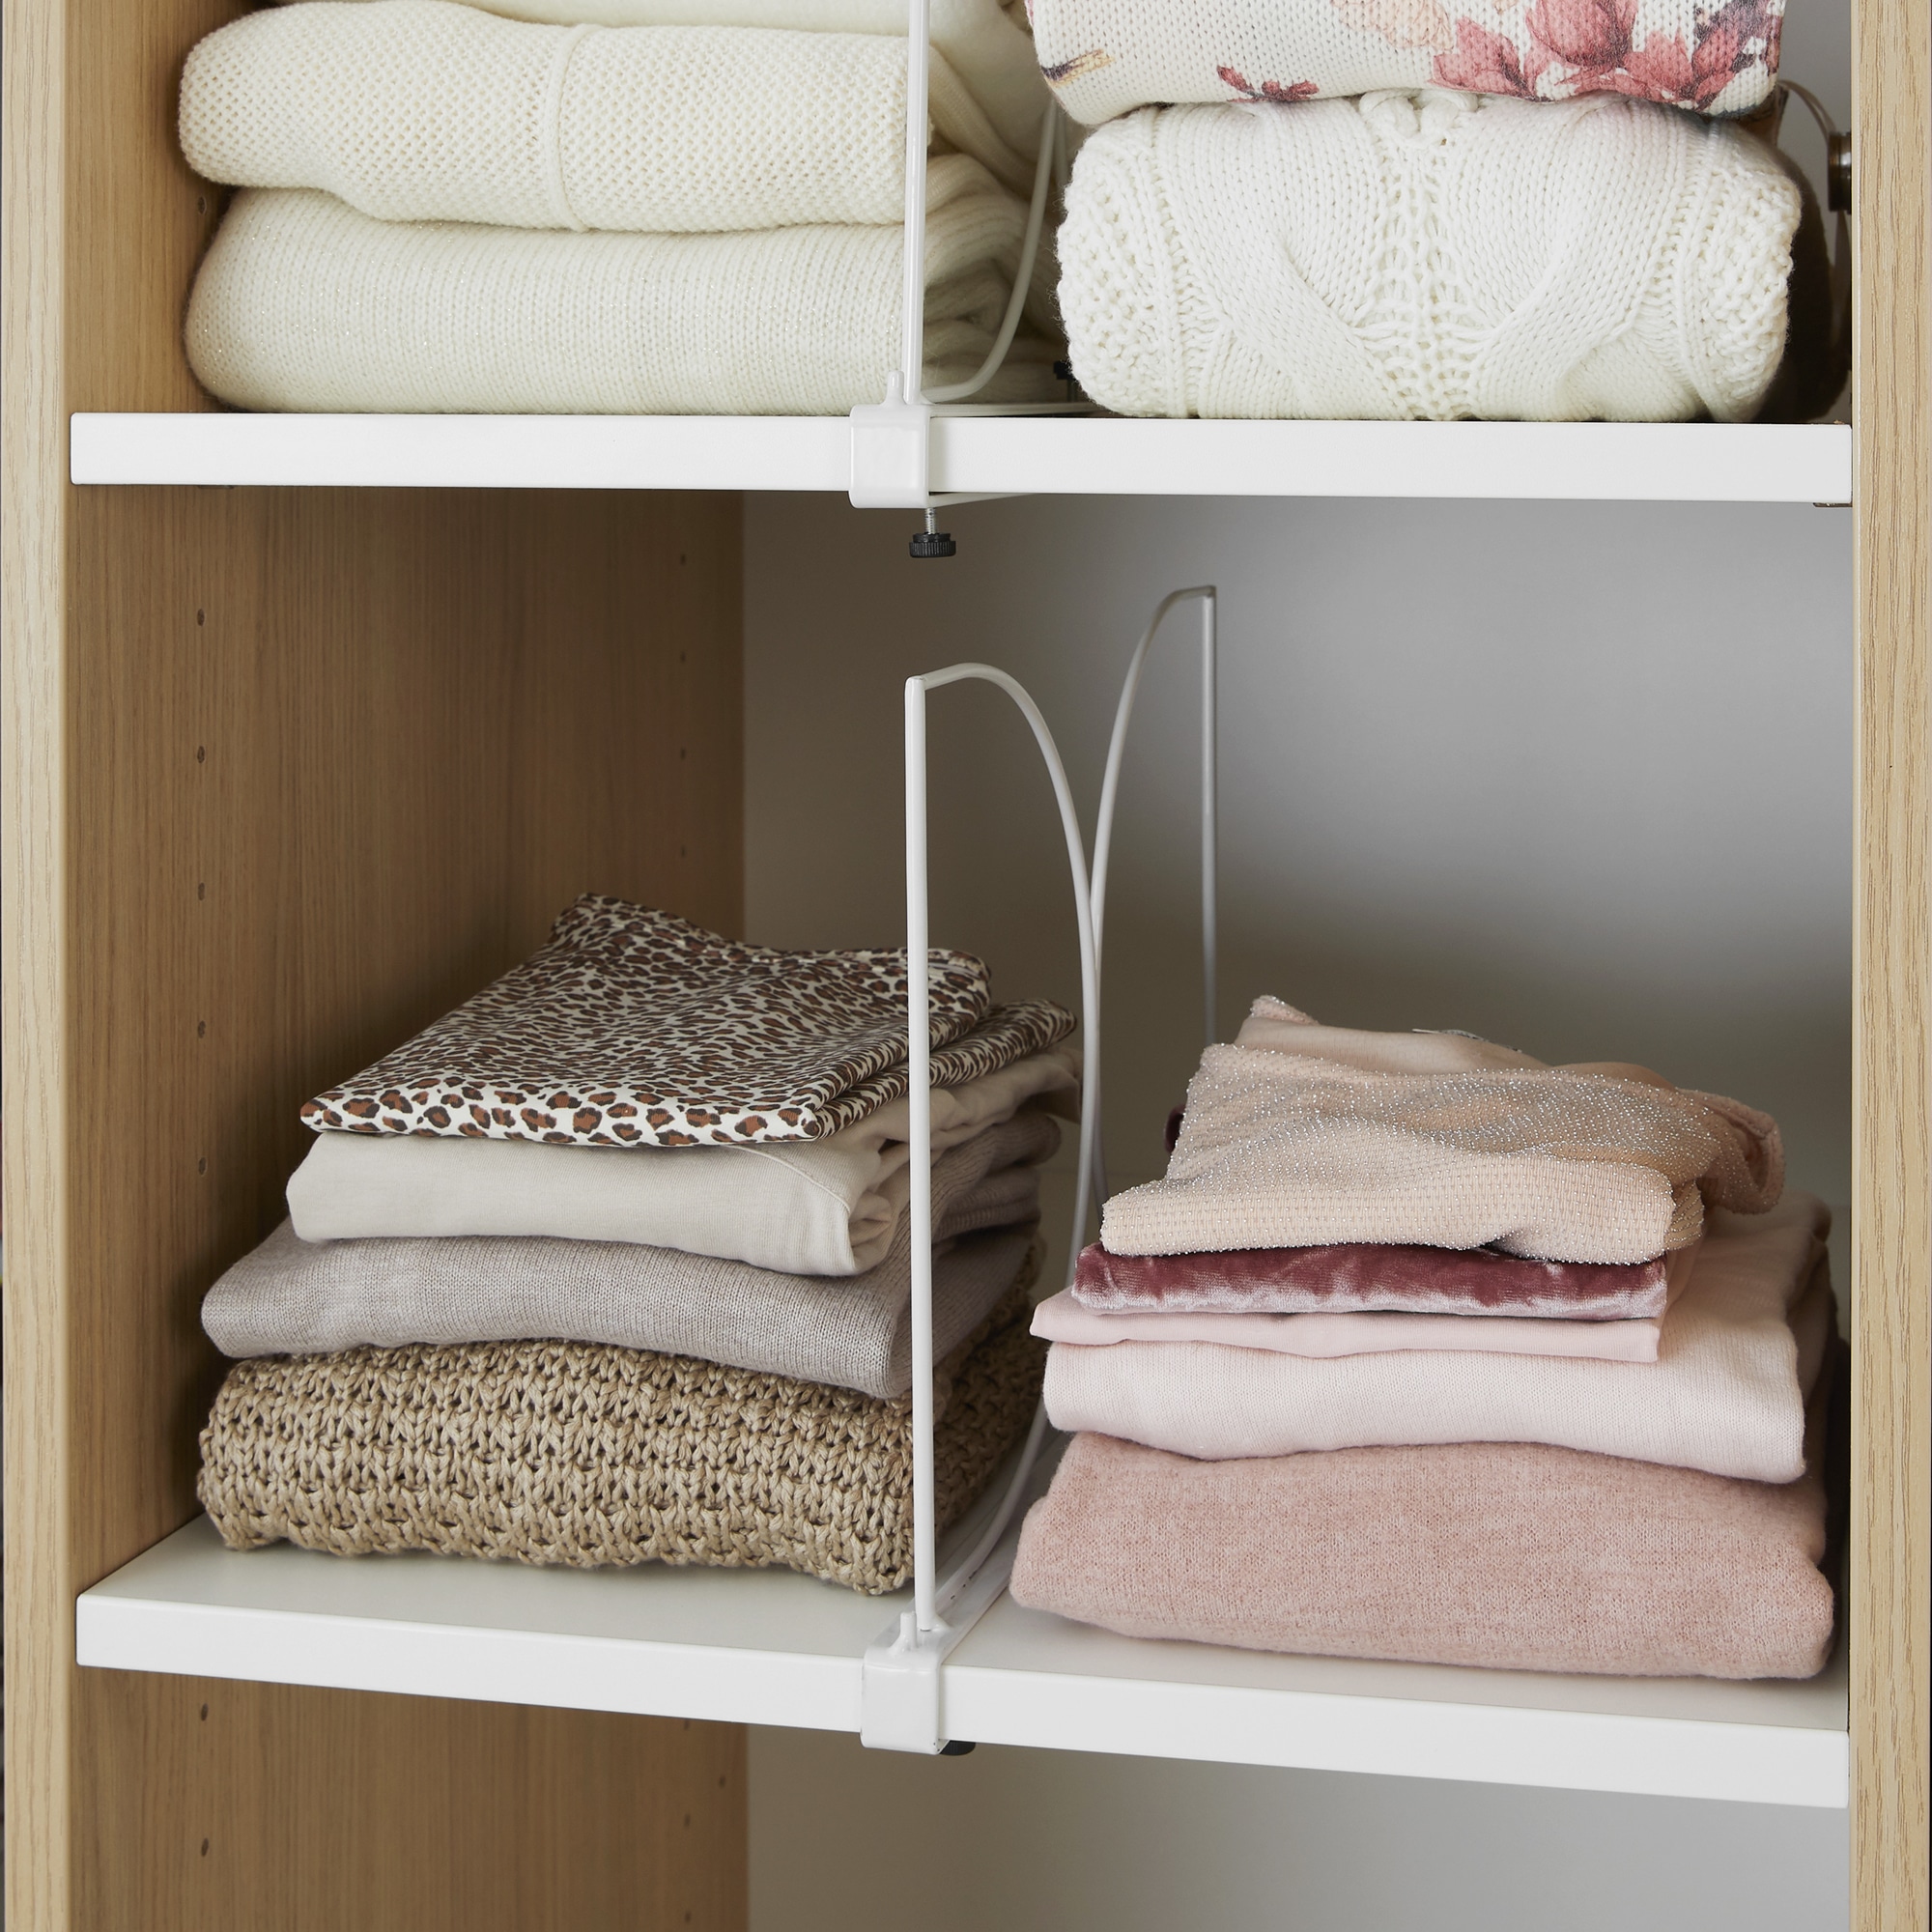 organisering af din garderobe